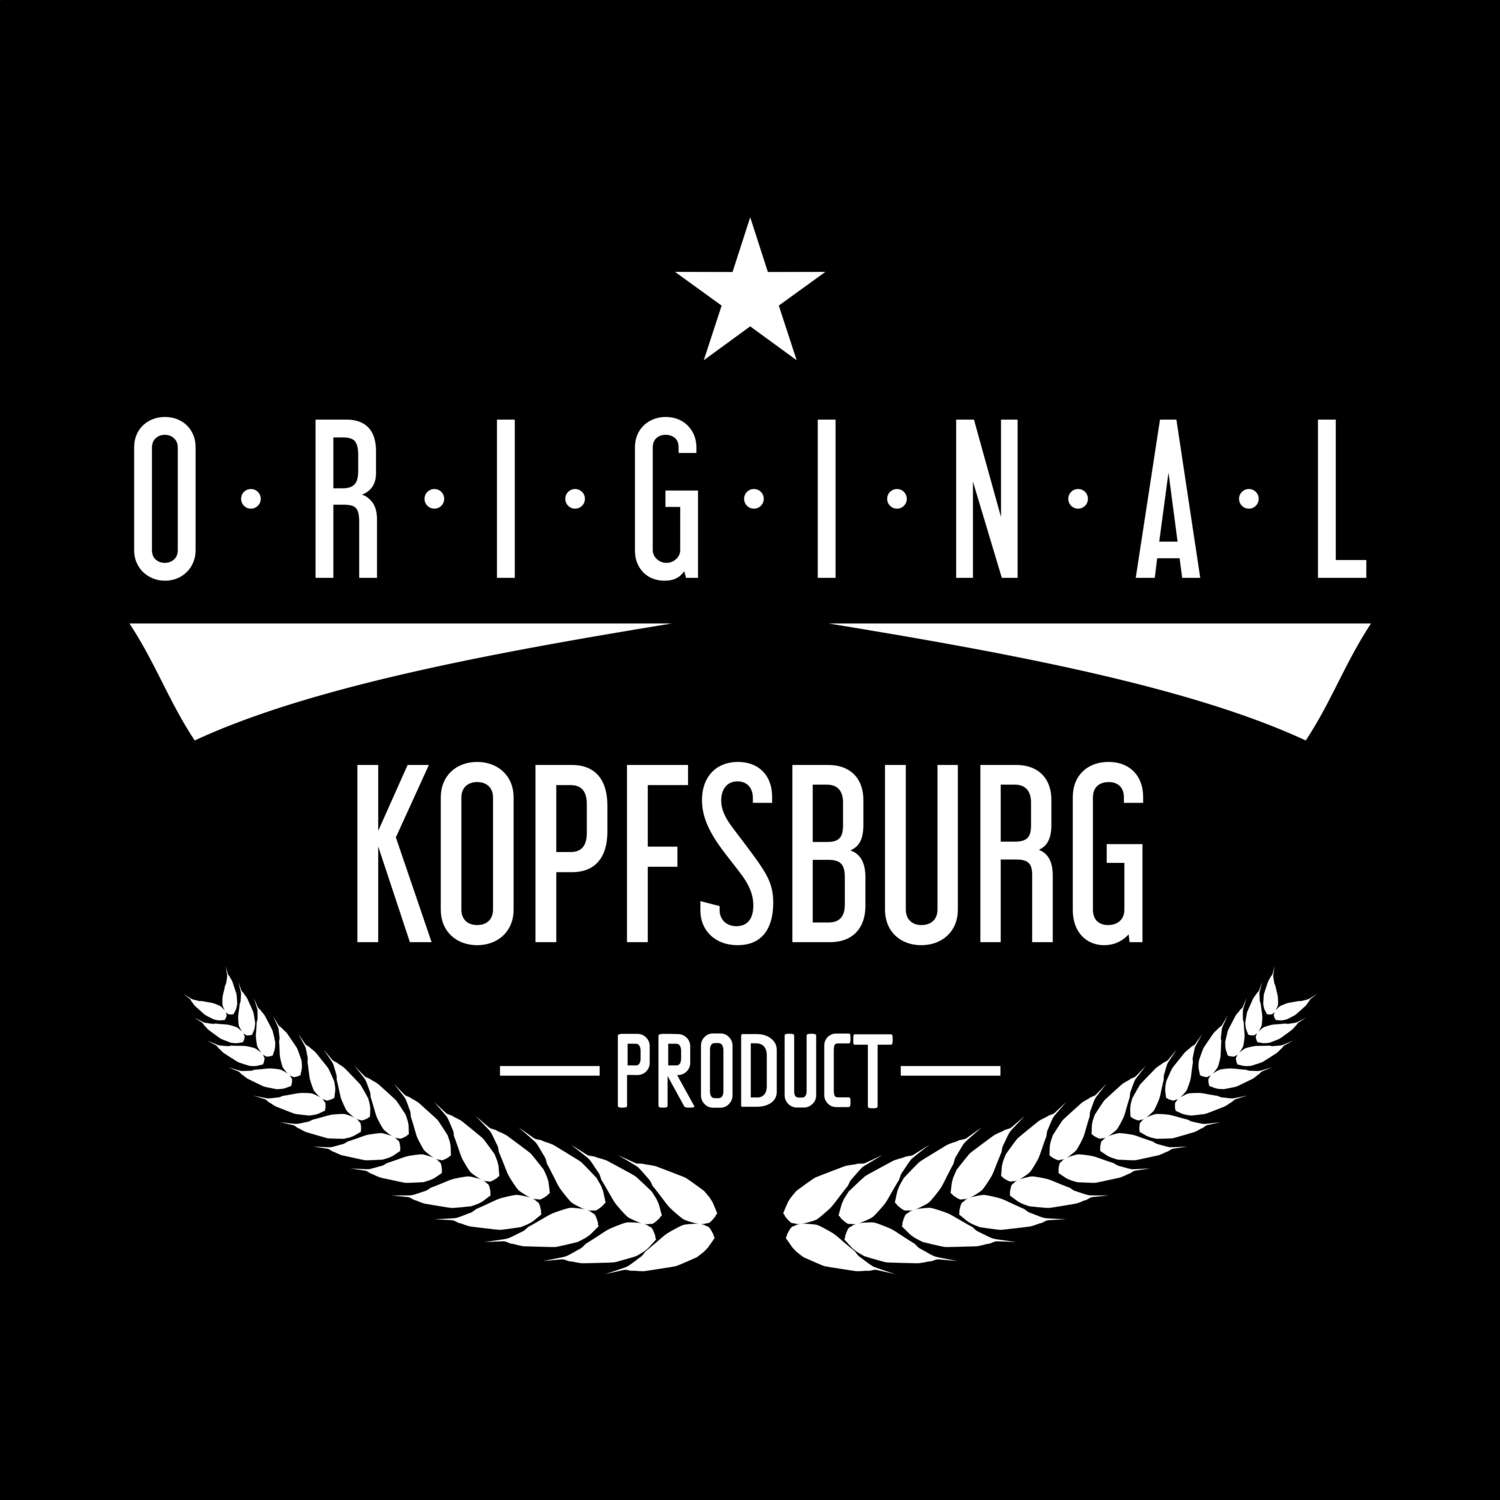 Kopfsburg T-Shirt »Original Product«